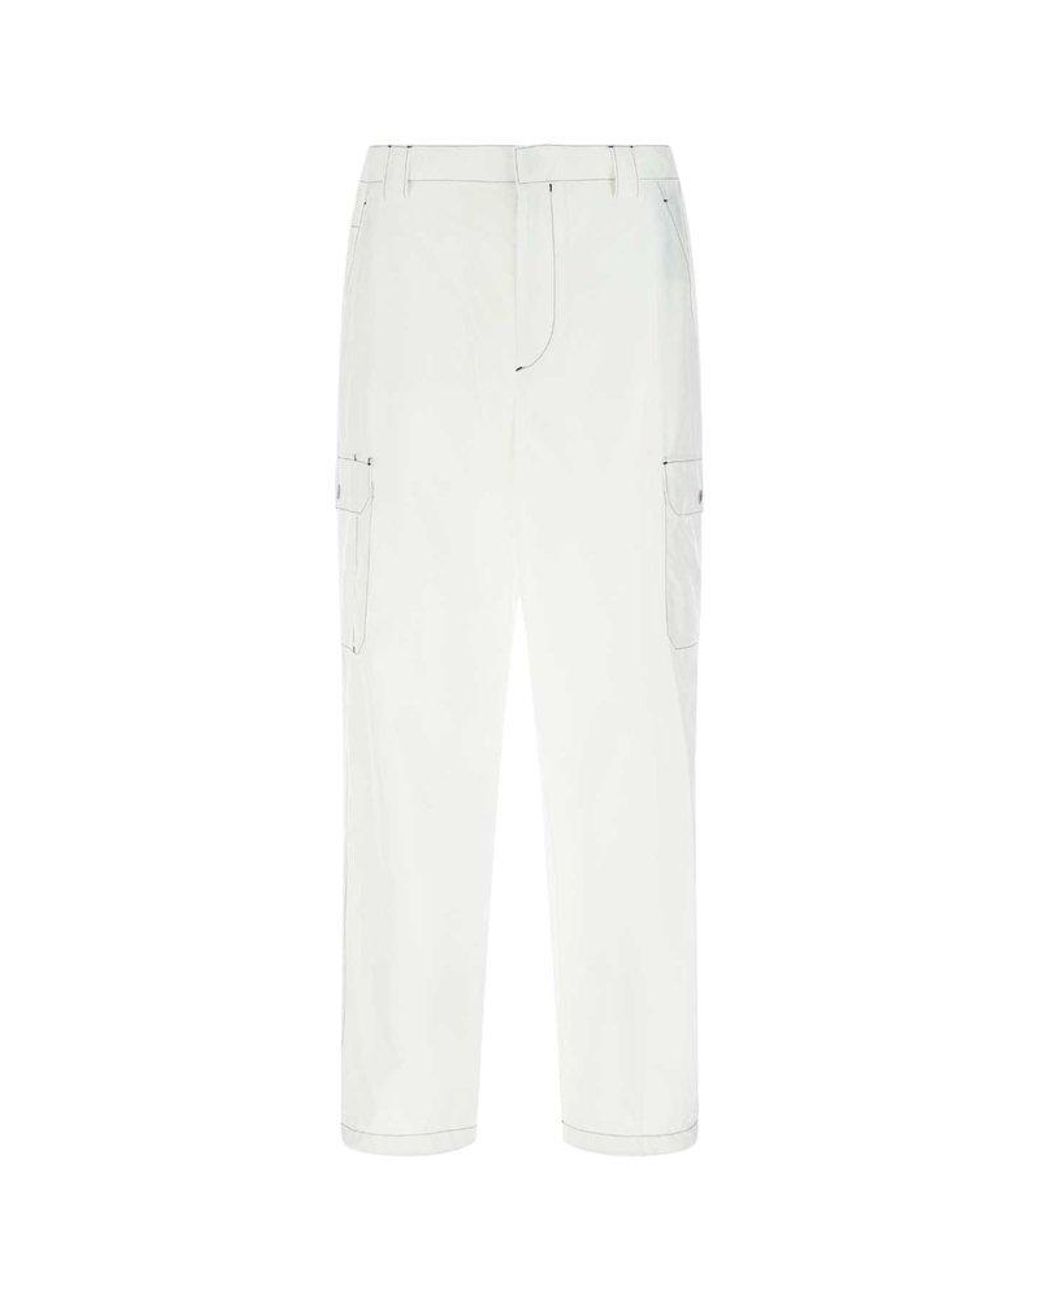 Prada Synthetic White Re-nylon Cargo Pant for Men - Save 36% | Lyst